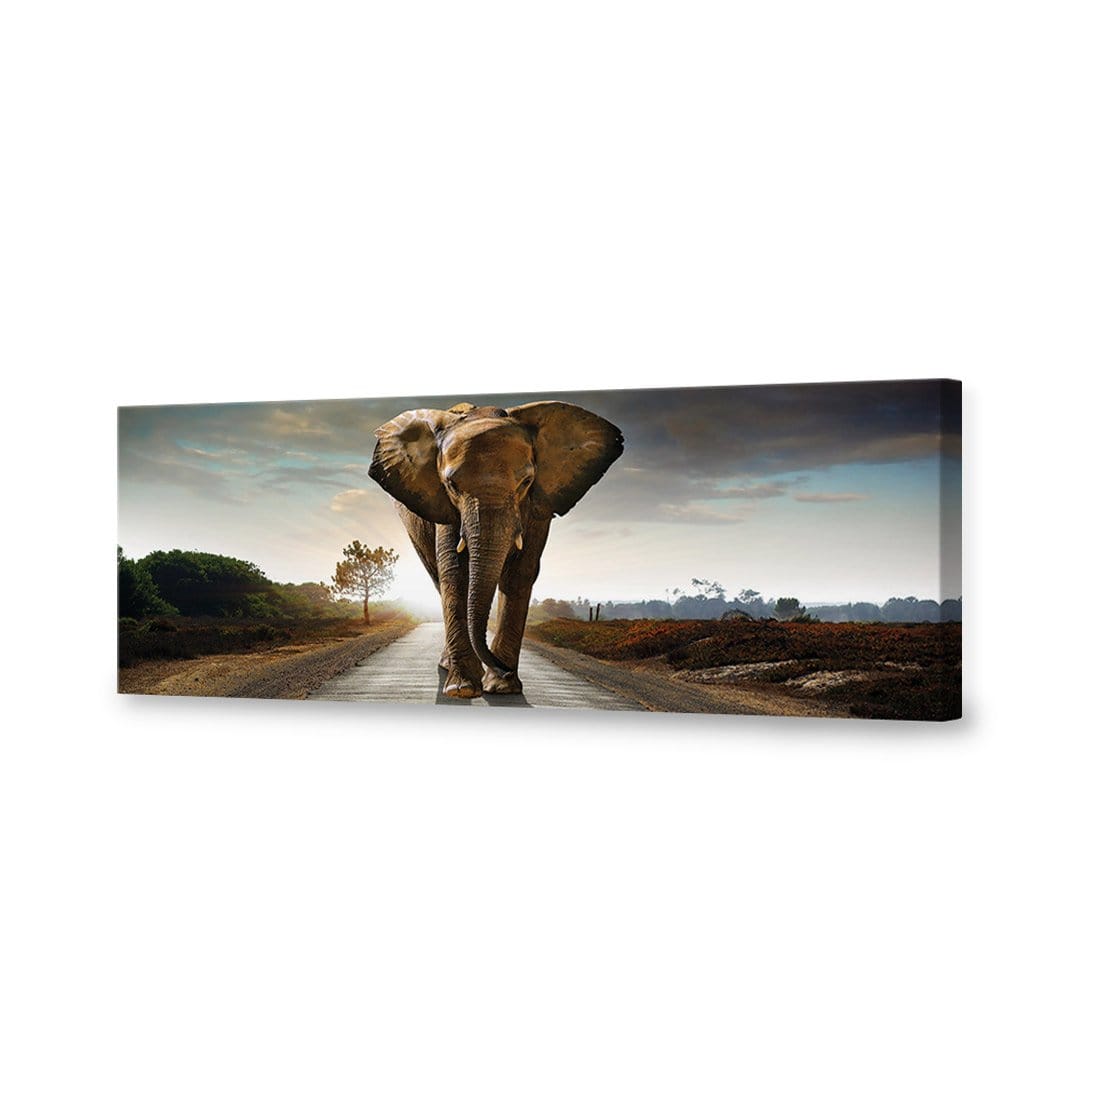 Determined Elephant (Long) Canvas Art-Canvas-Wall Art Designs-60x20cm-Canvas - No Frame-Wall Art Designs